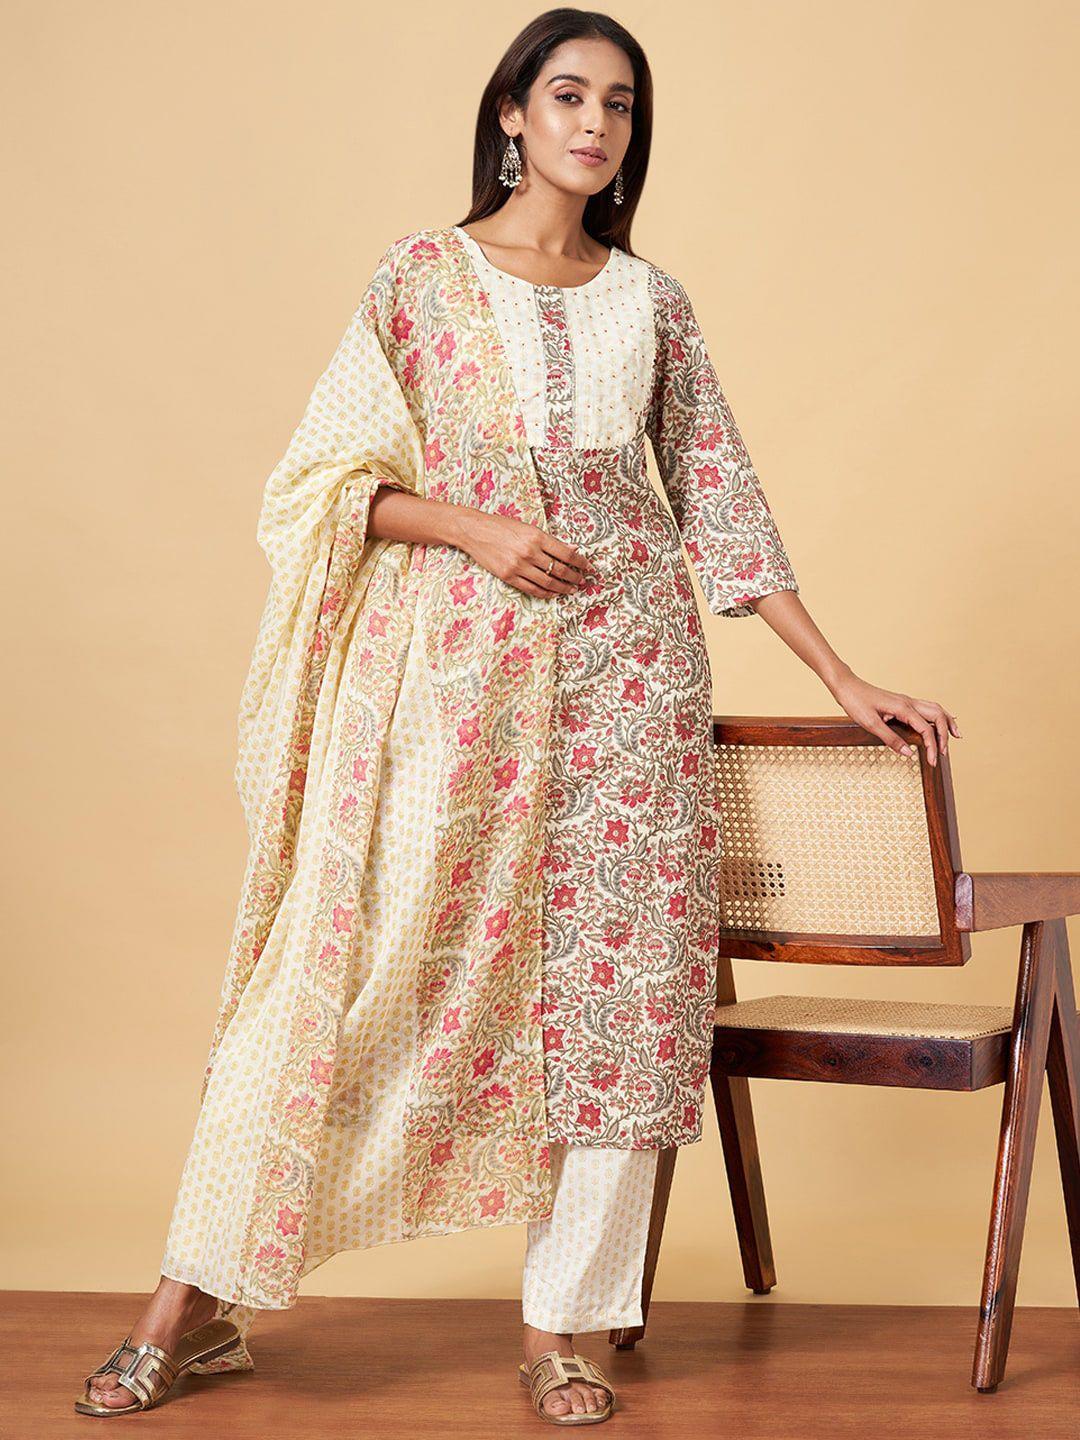 yu by pantaloons floral printed beads and stones pure cotton kurta & palazzos with dupatta